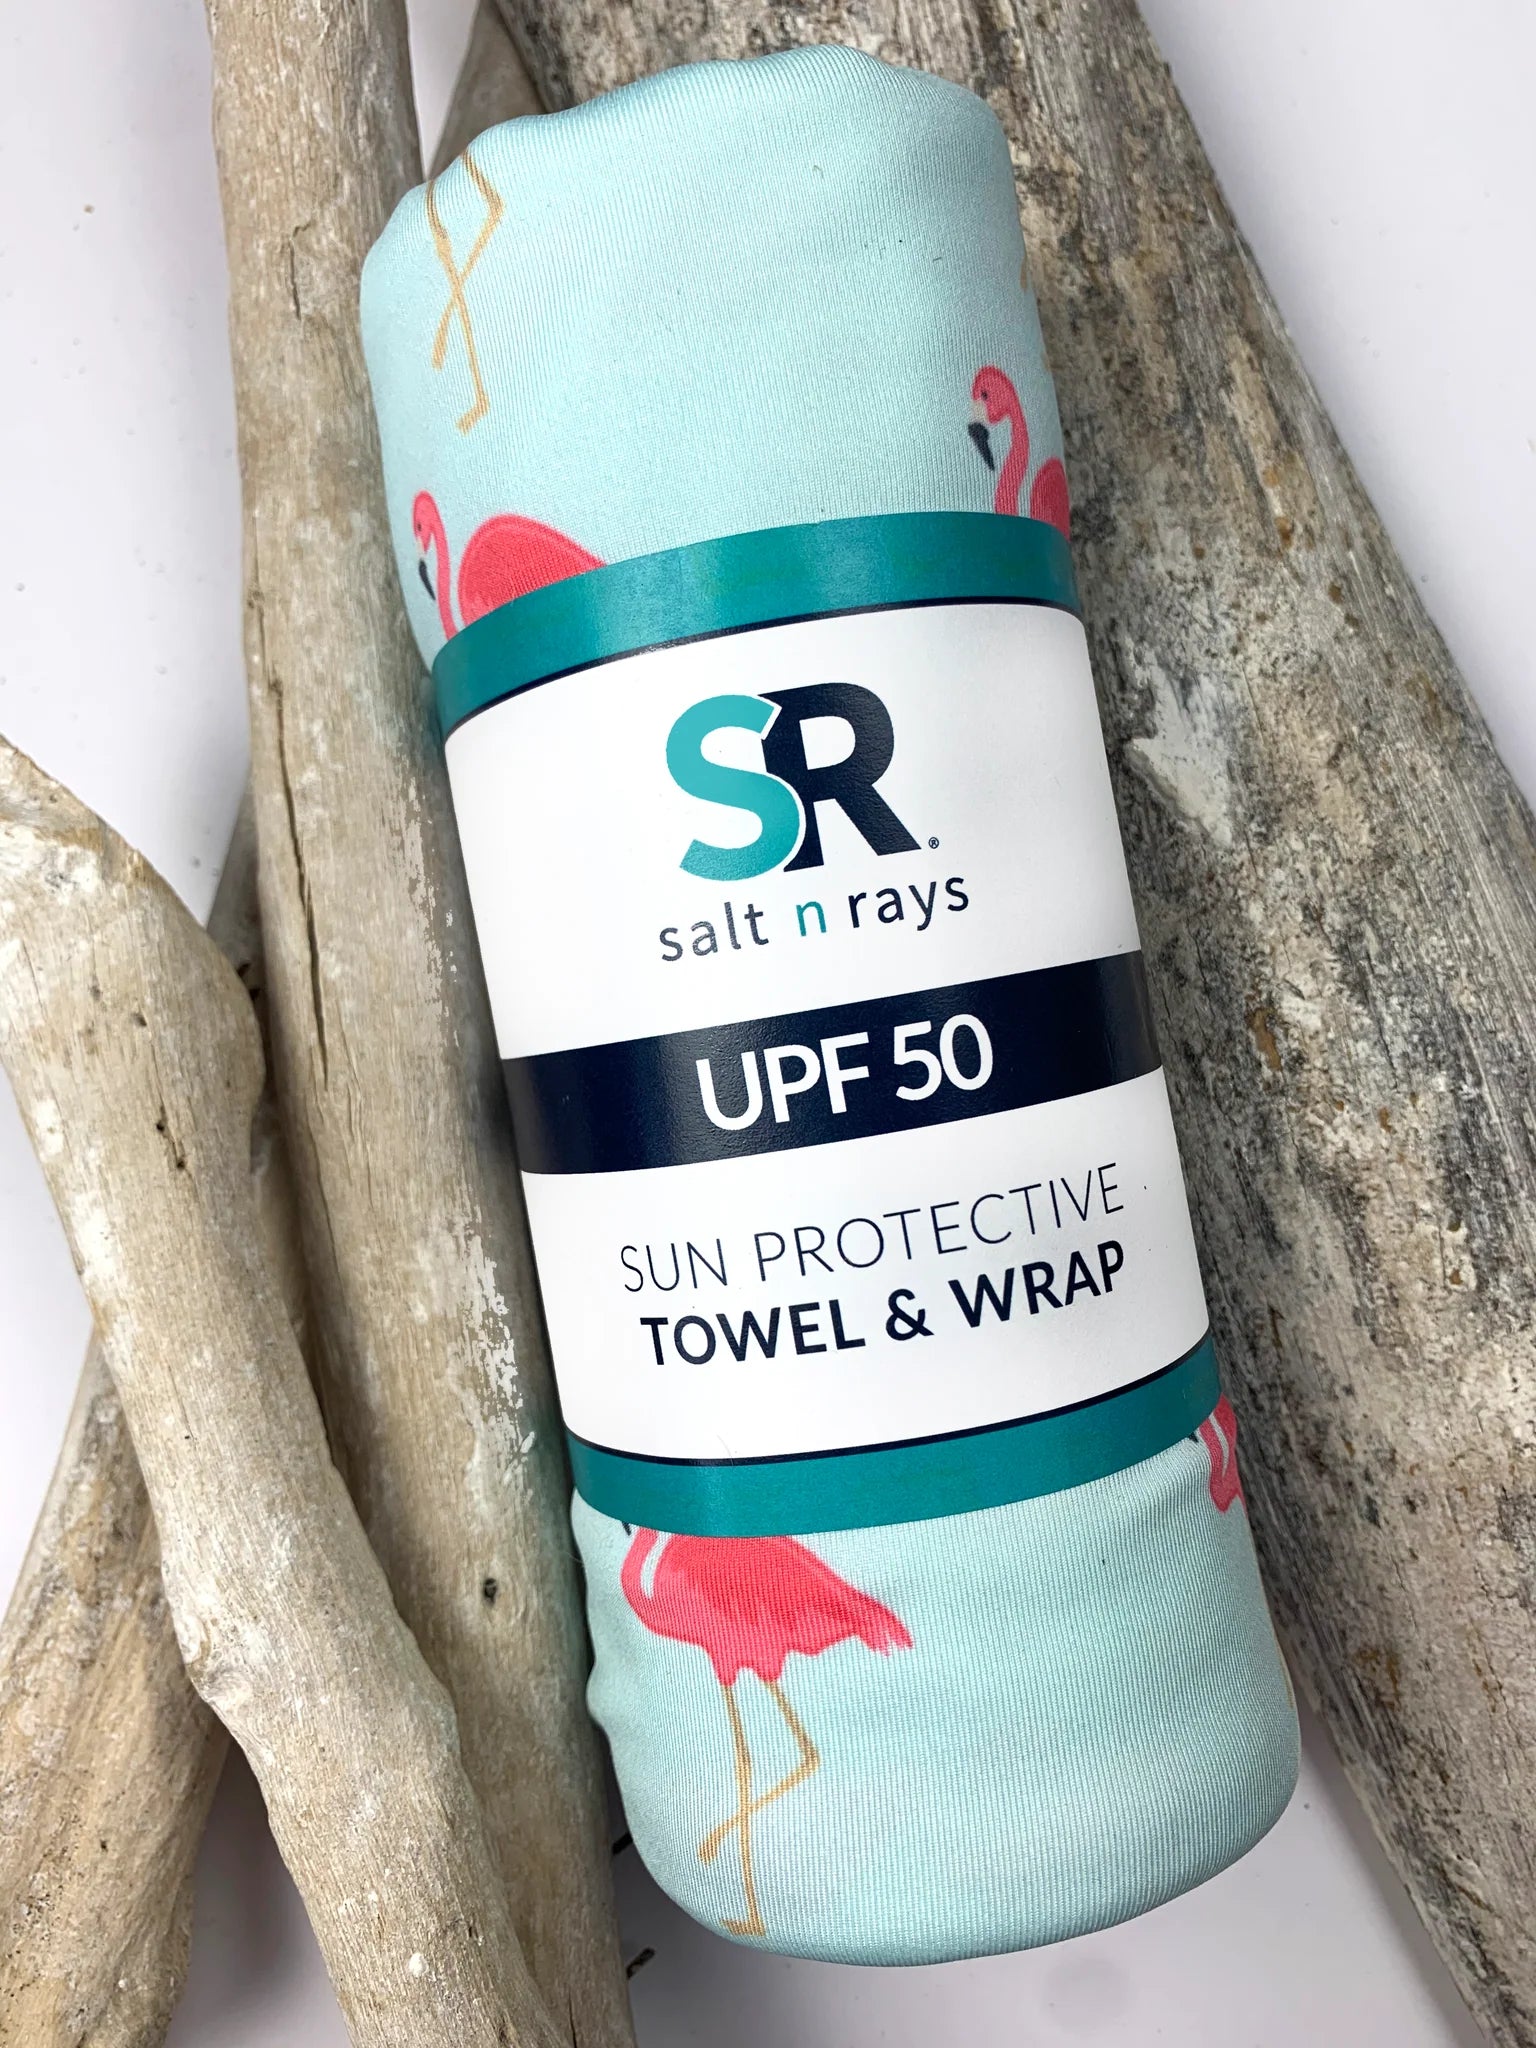 UPF 50 TOWEL AND WRAP - The Silver Dahlia